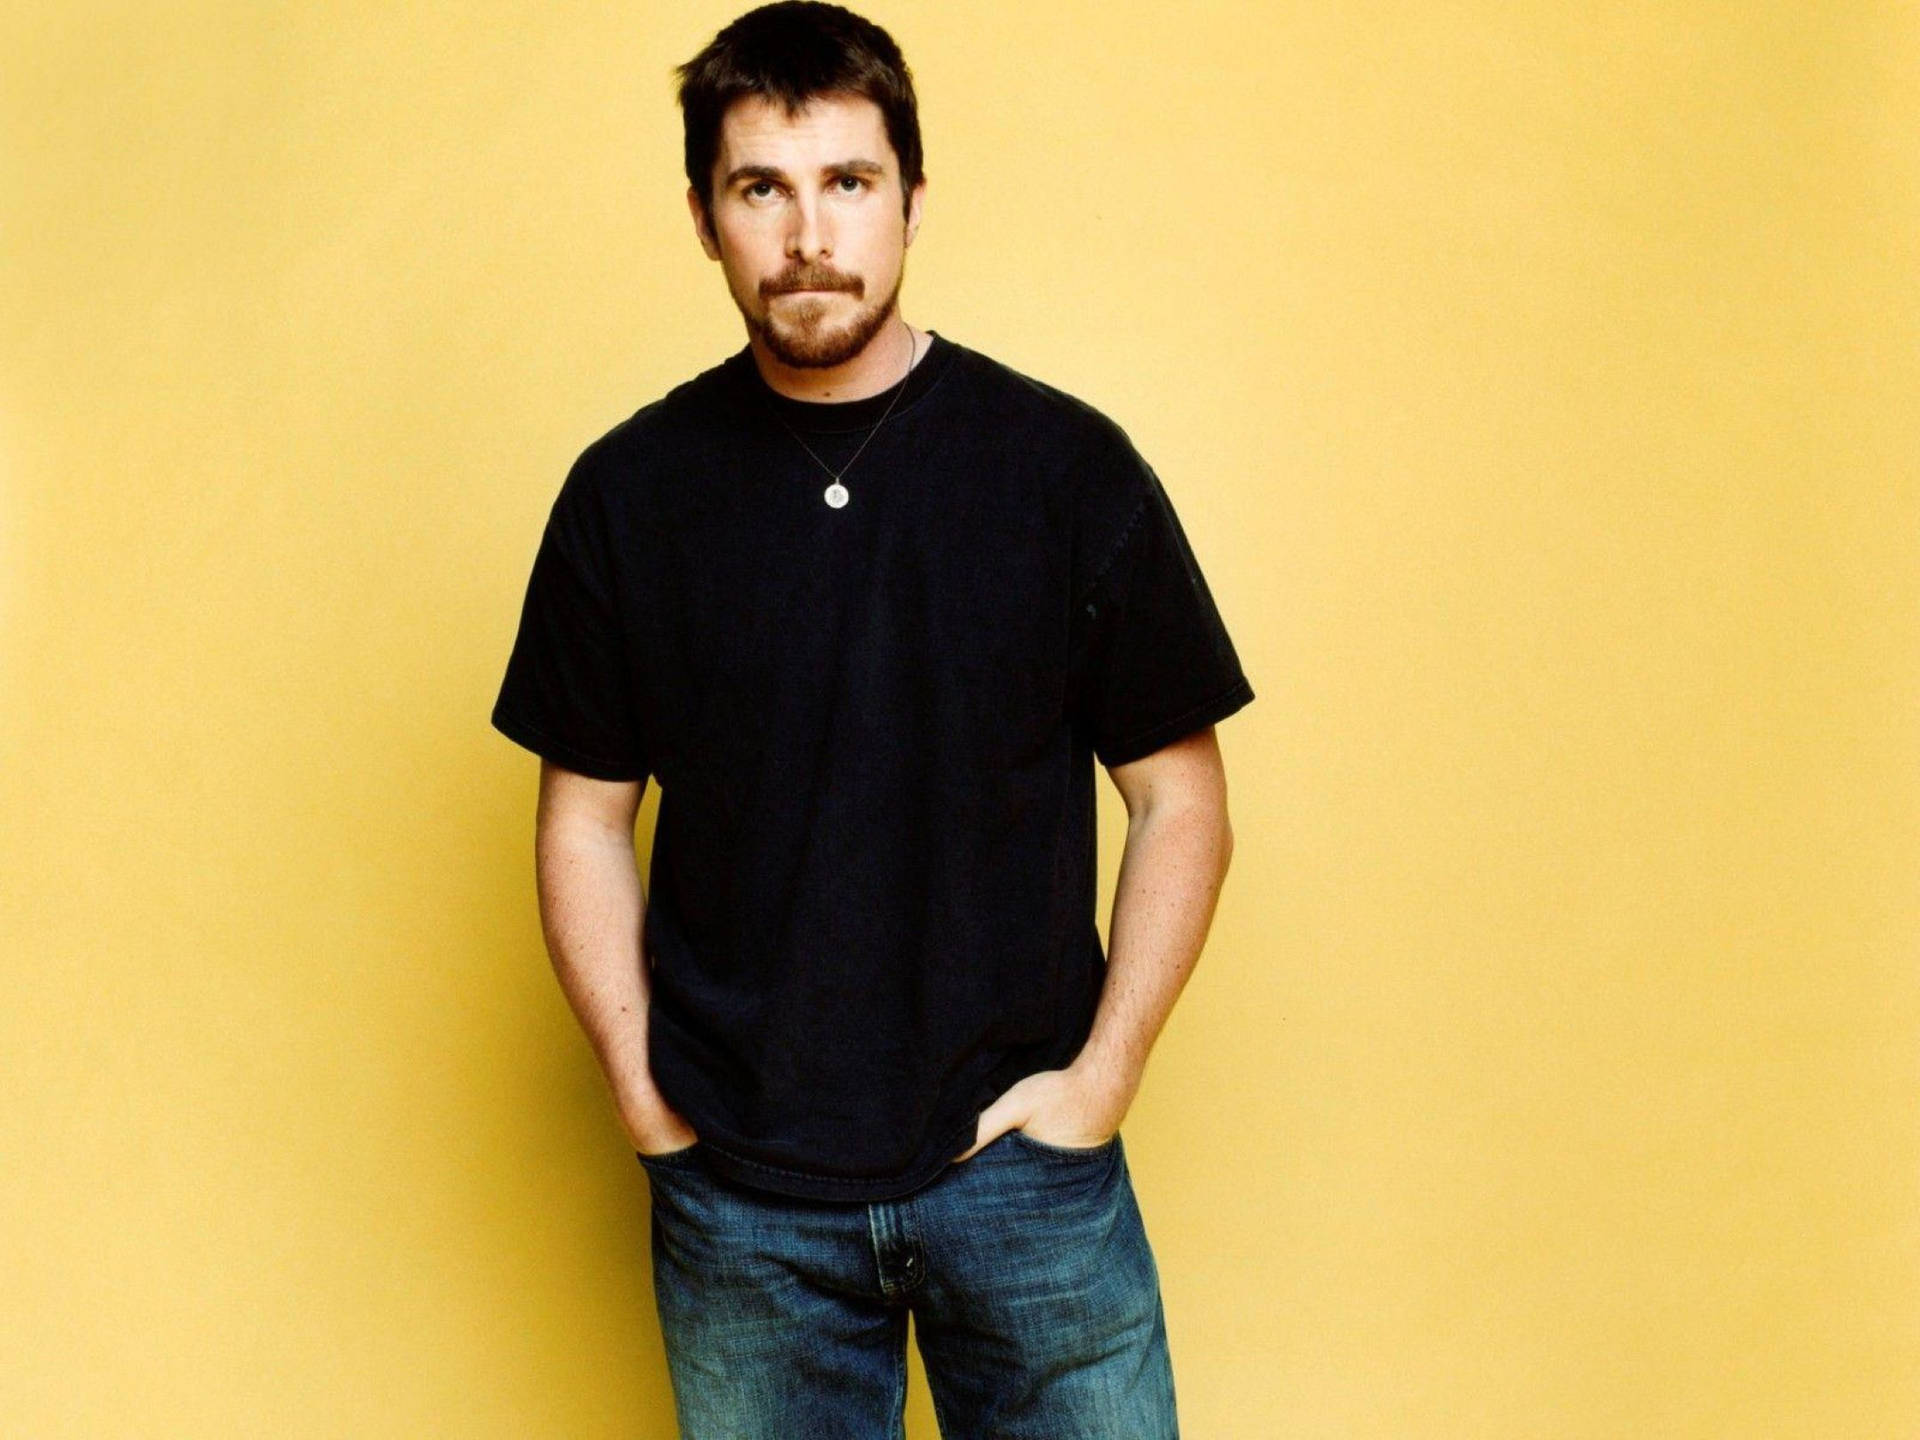 Christian Bale Batman Actor Background